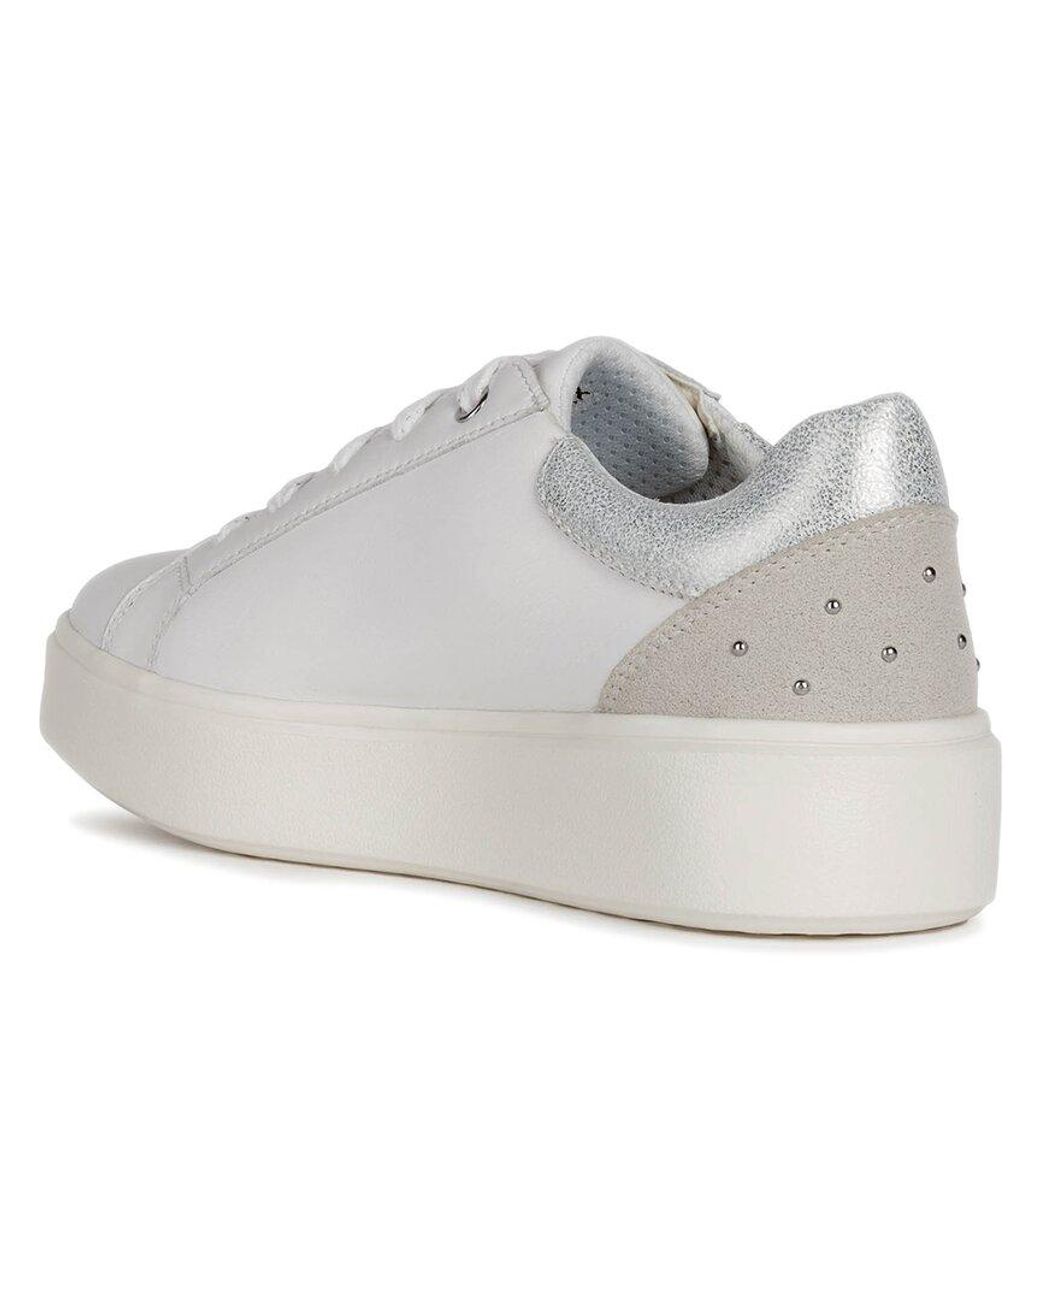 Geox Nhenbus Sneaker in White | Lyst